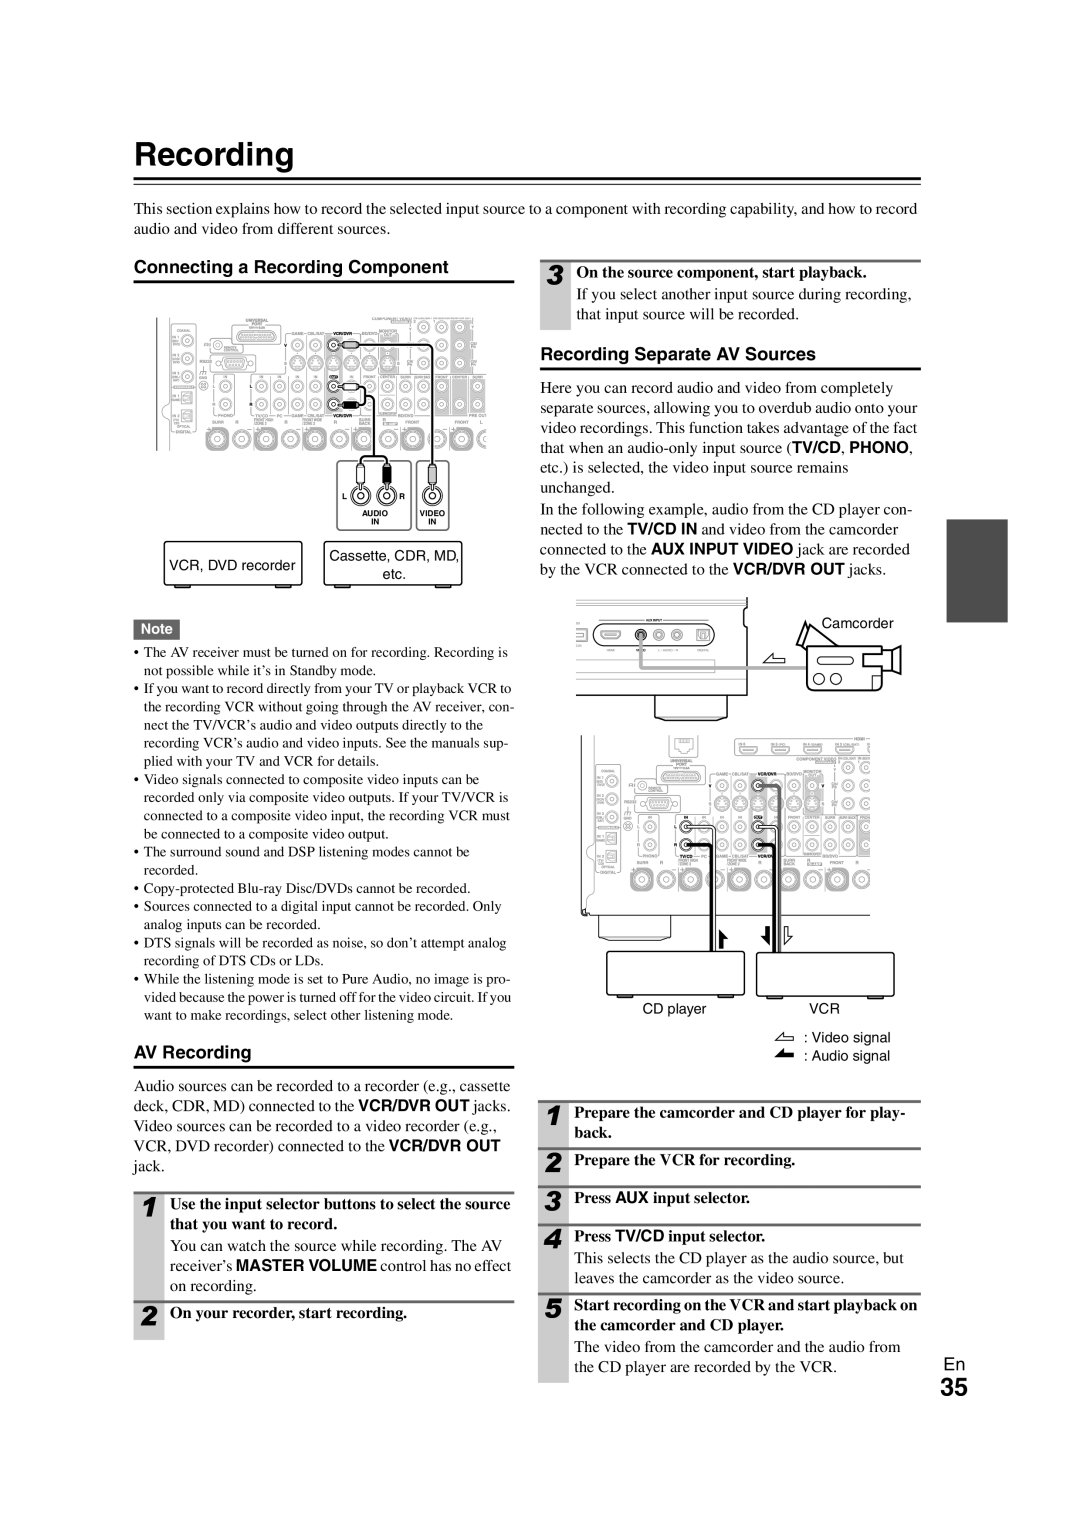 Onkyo TX-NR1008 instruction manual Connecting a Recording Component, AV Recording 